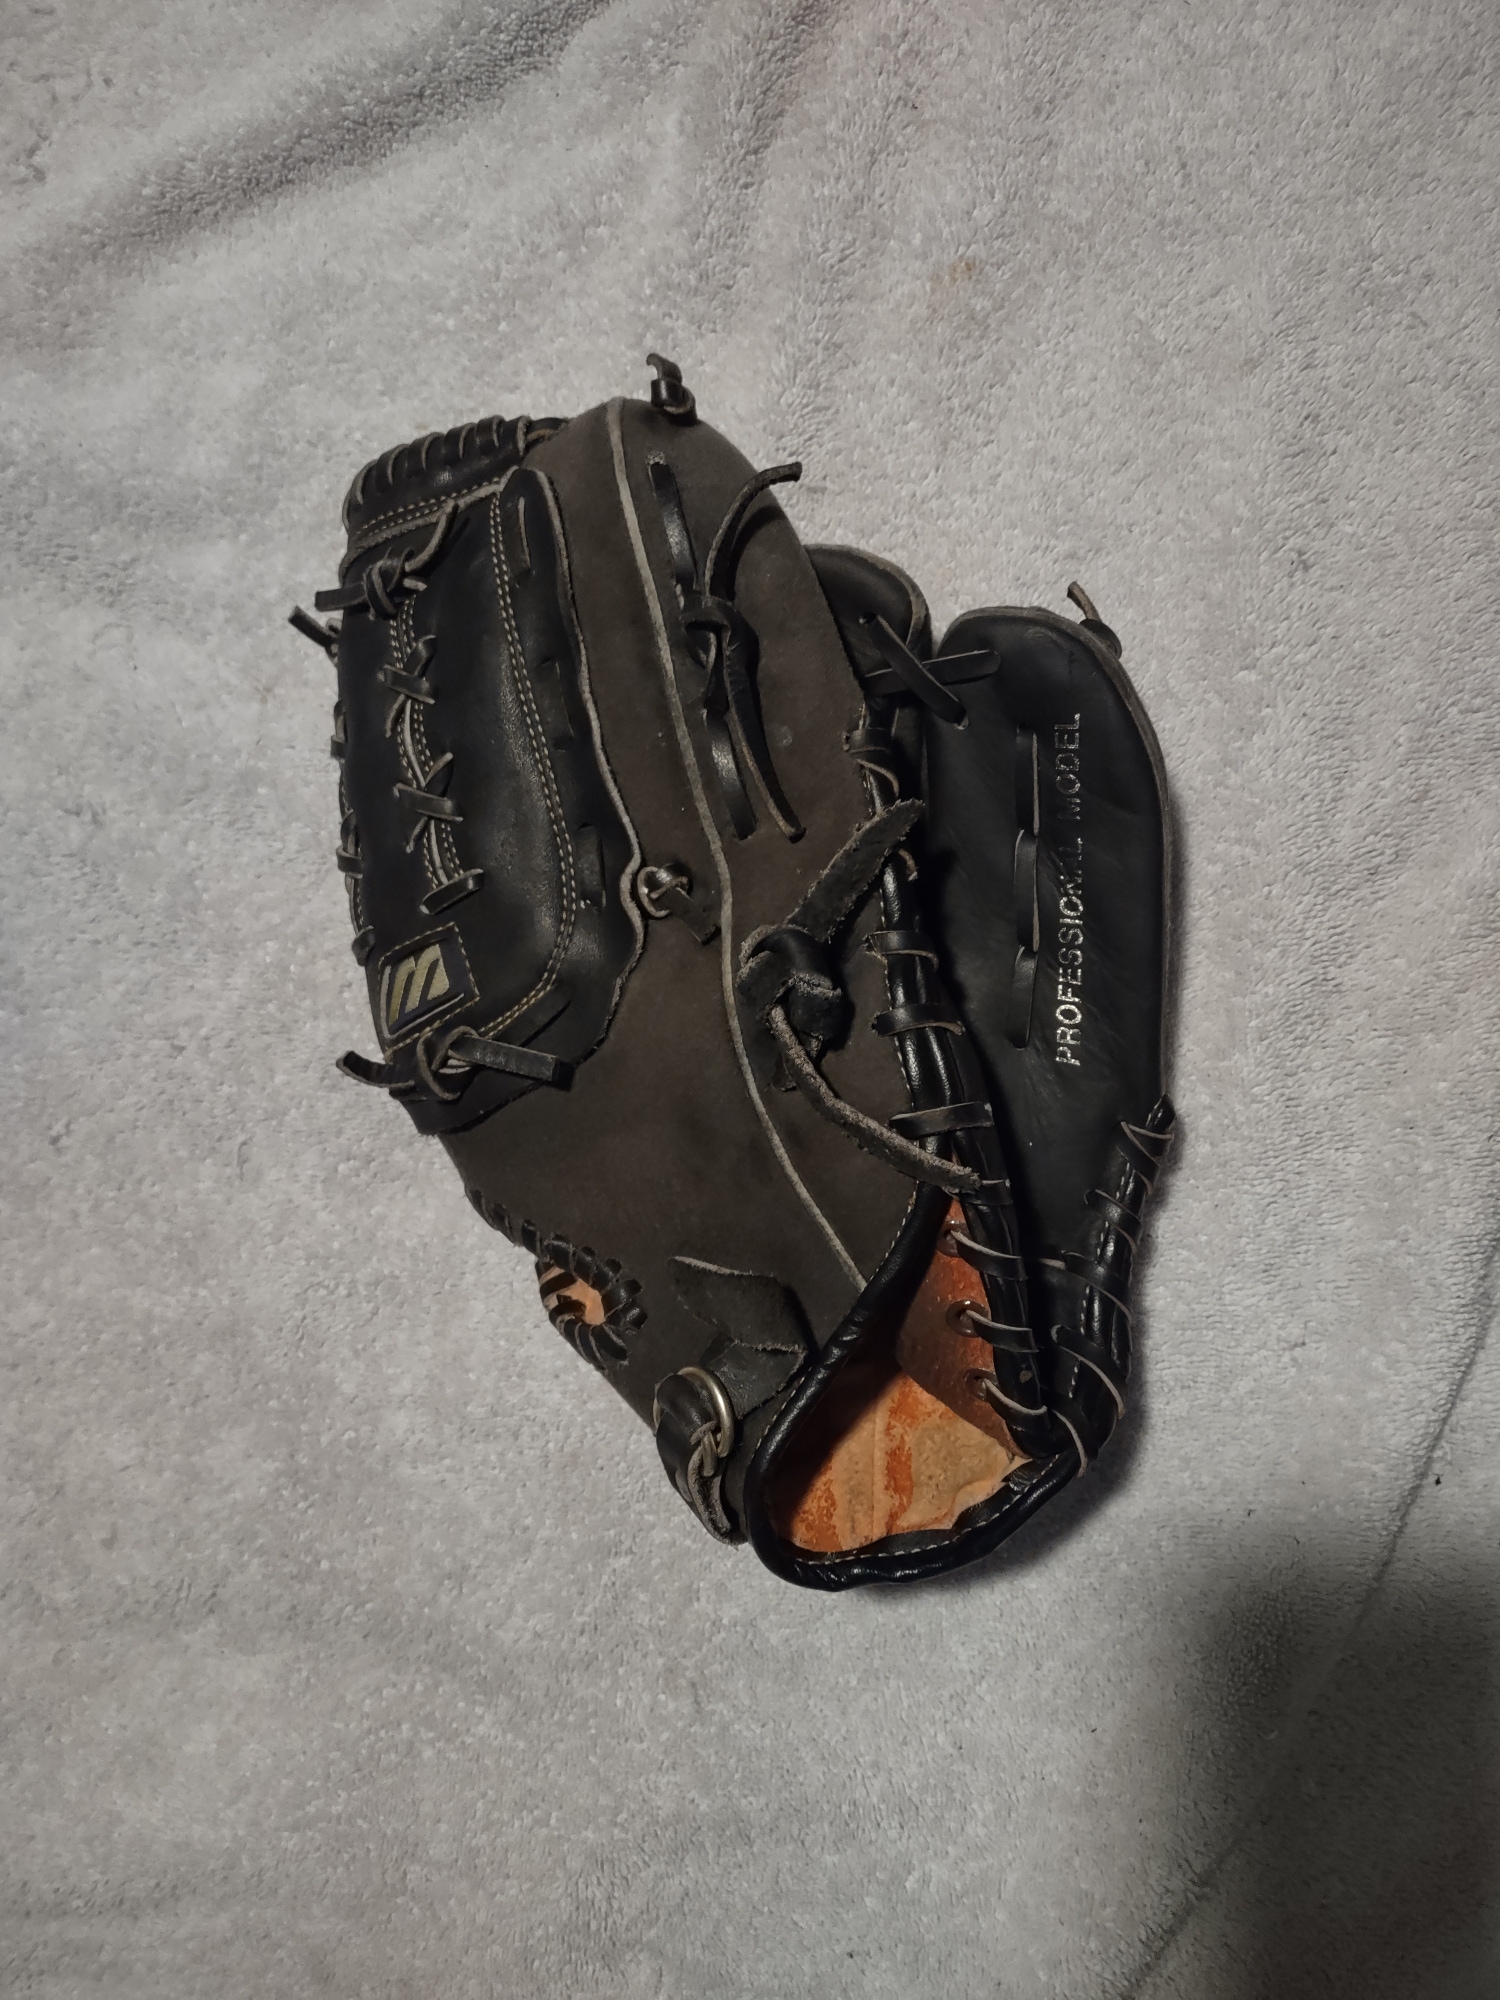 Used Right Hand Throw Mizuno Pitcher's Professional model Baseball Glove 12"